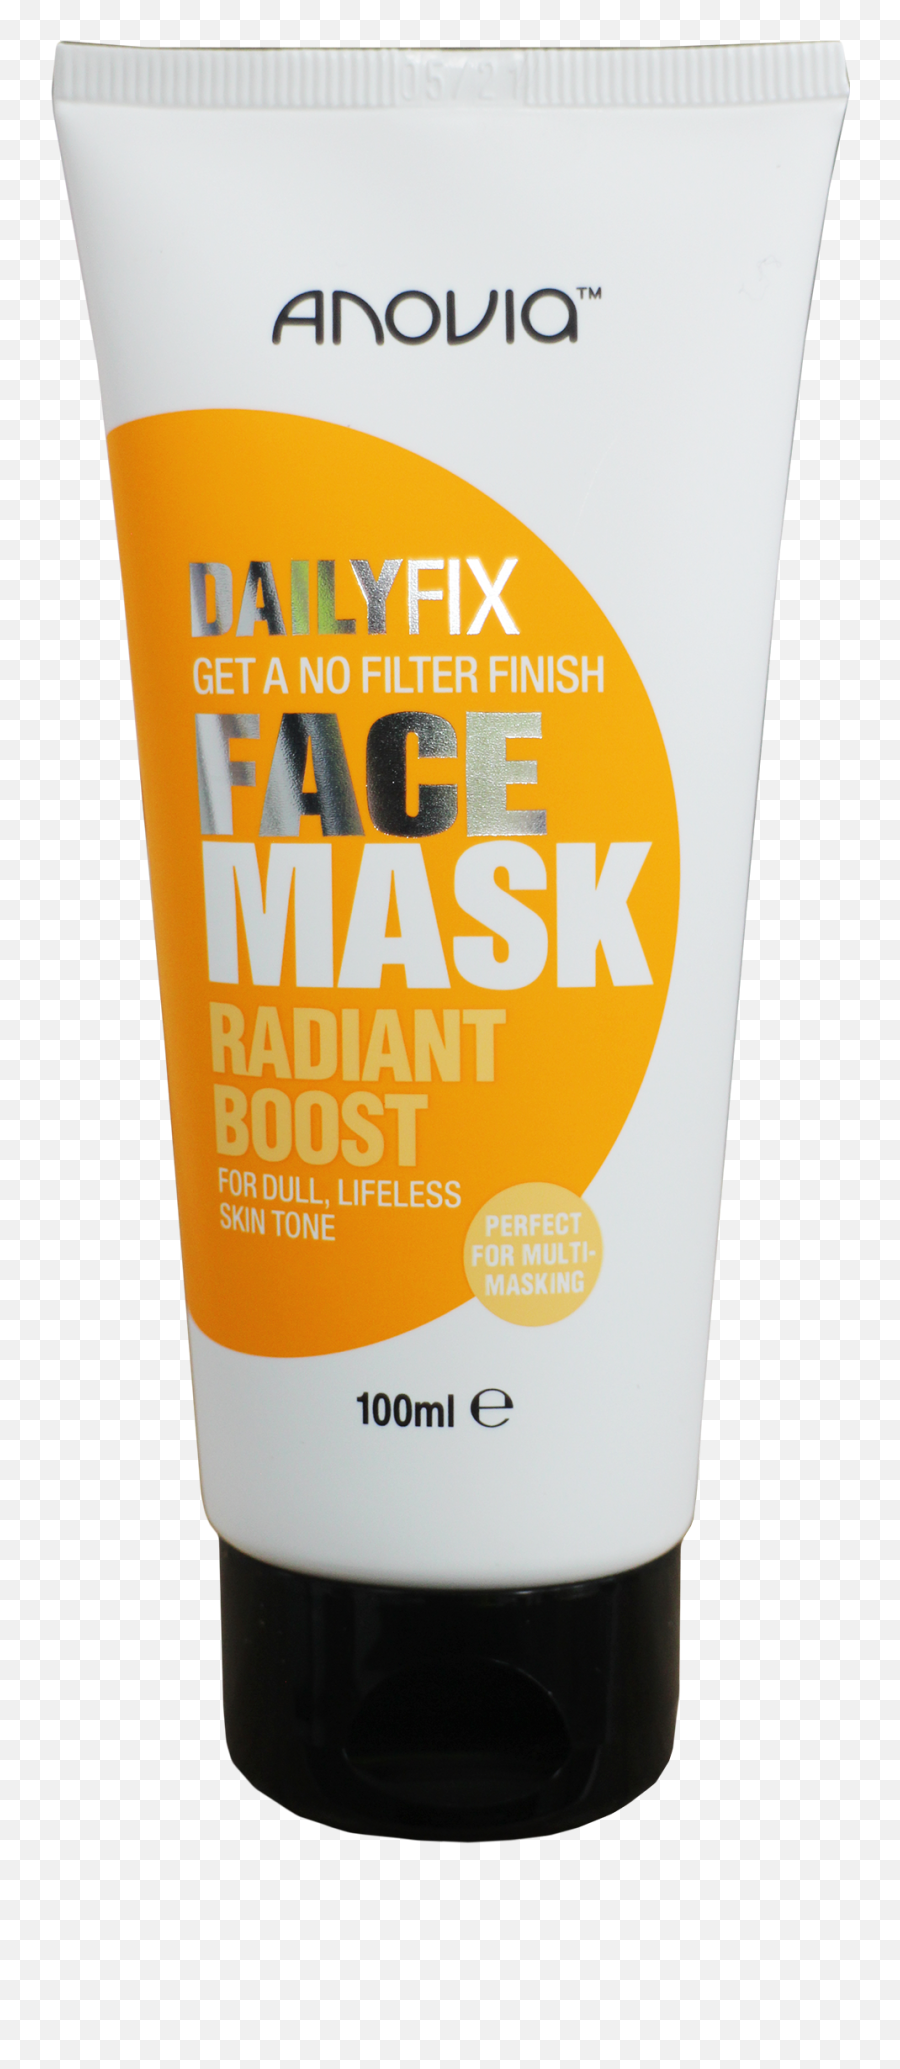 Anovia Daily Fix Radiant Boost Face Mask 100ml - Sunscreen Emoji,Mouth Zipped Emoji